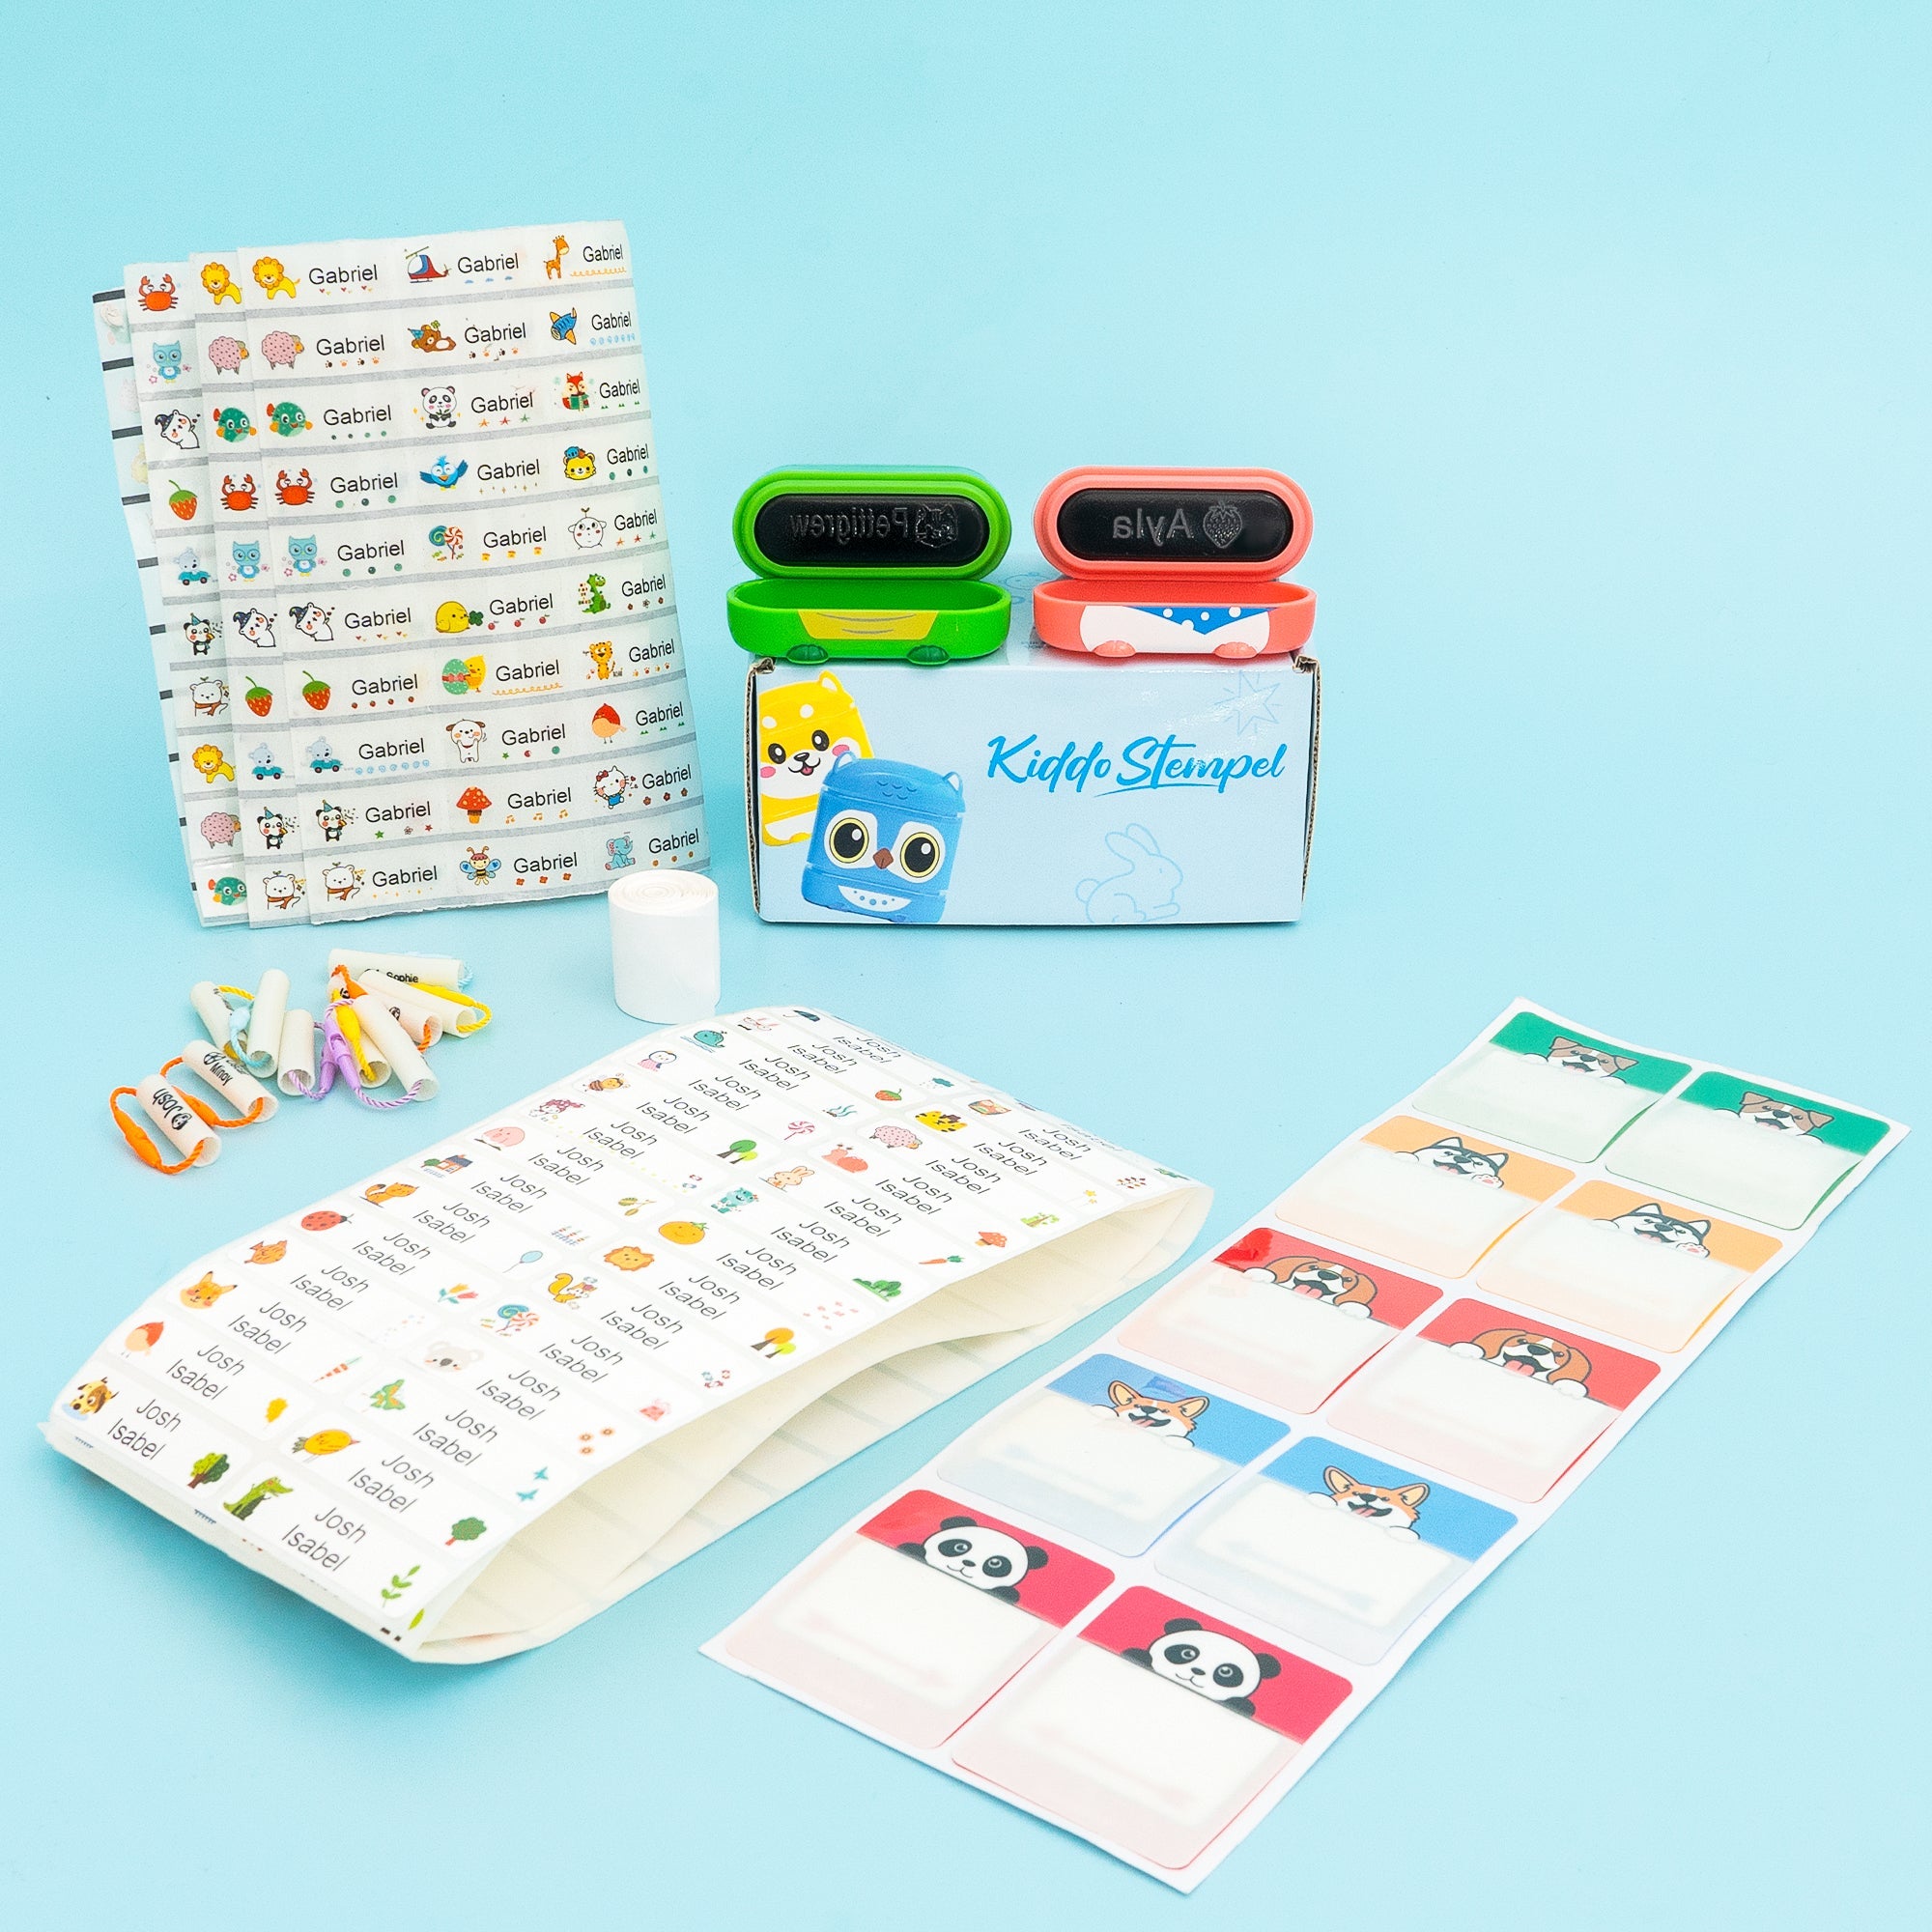 KiddoStamp 2.0 - Ultimate Labeling Kit